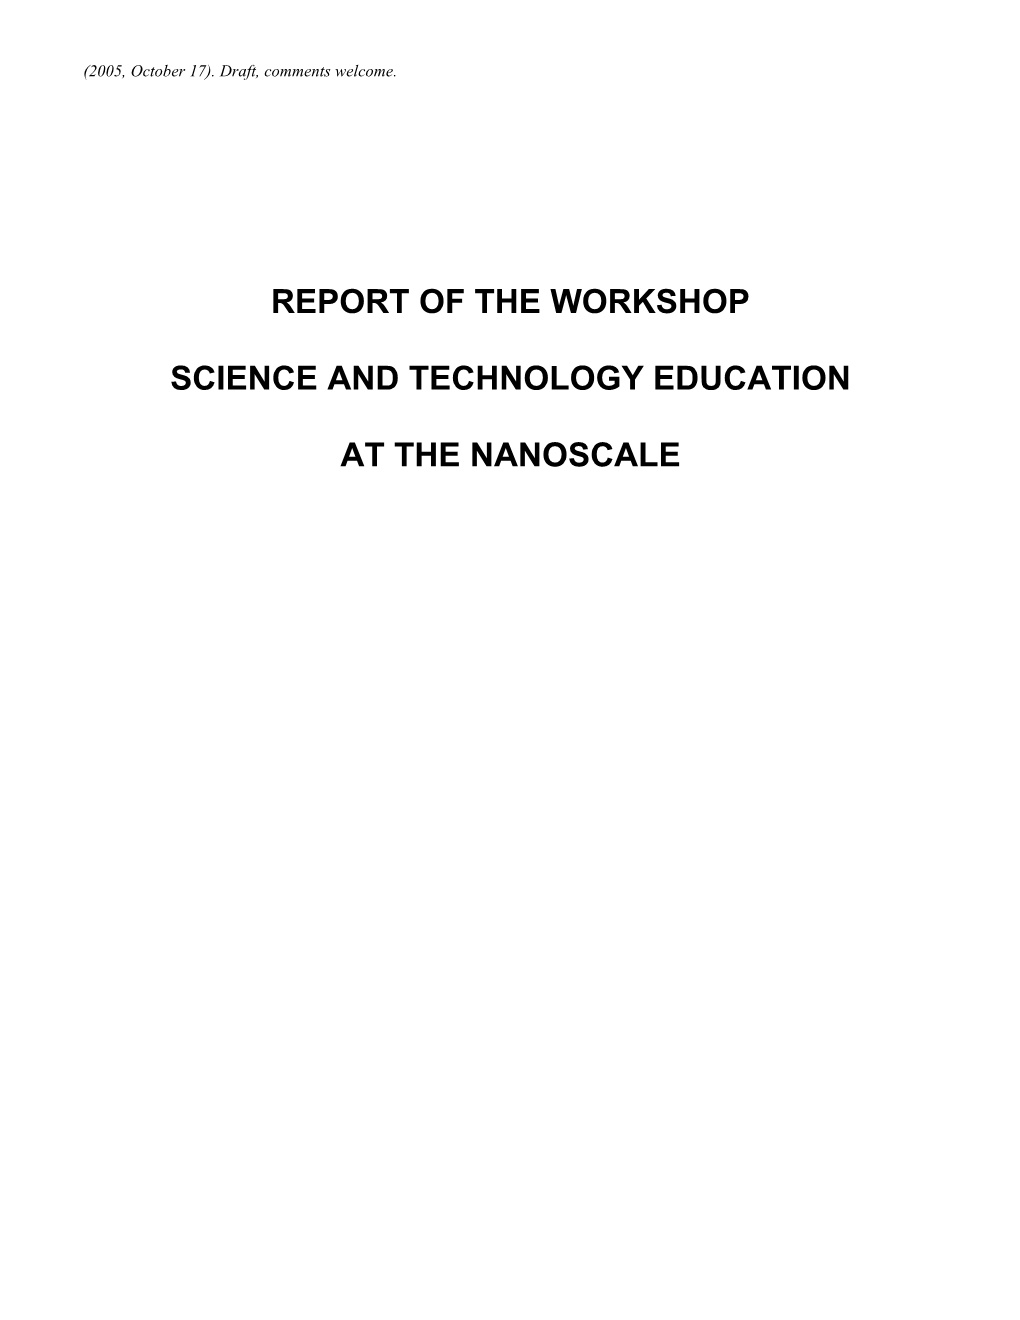 Advancing Nanoscience Education Workshop Report